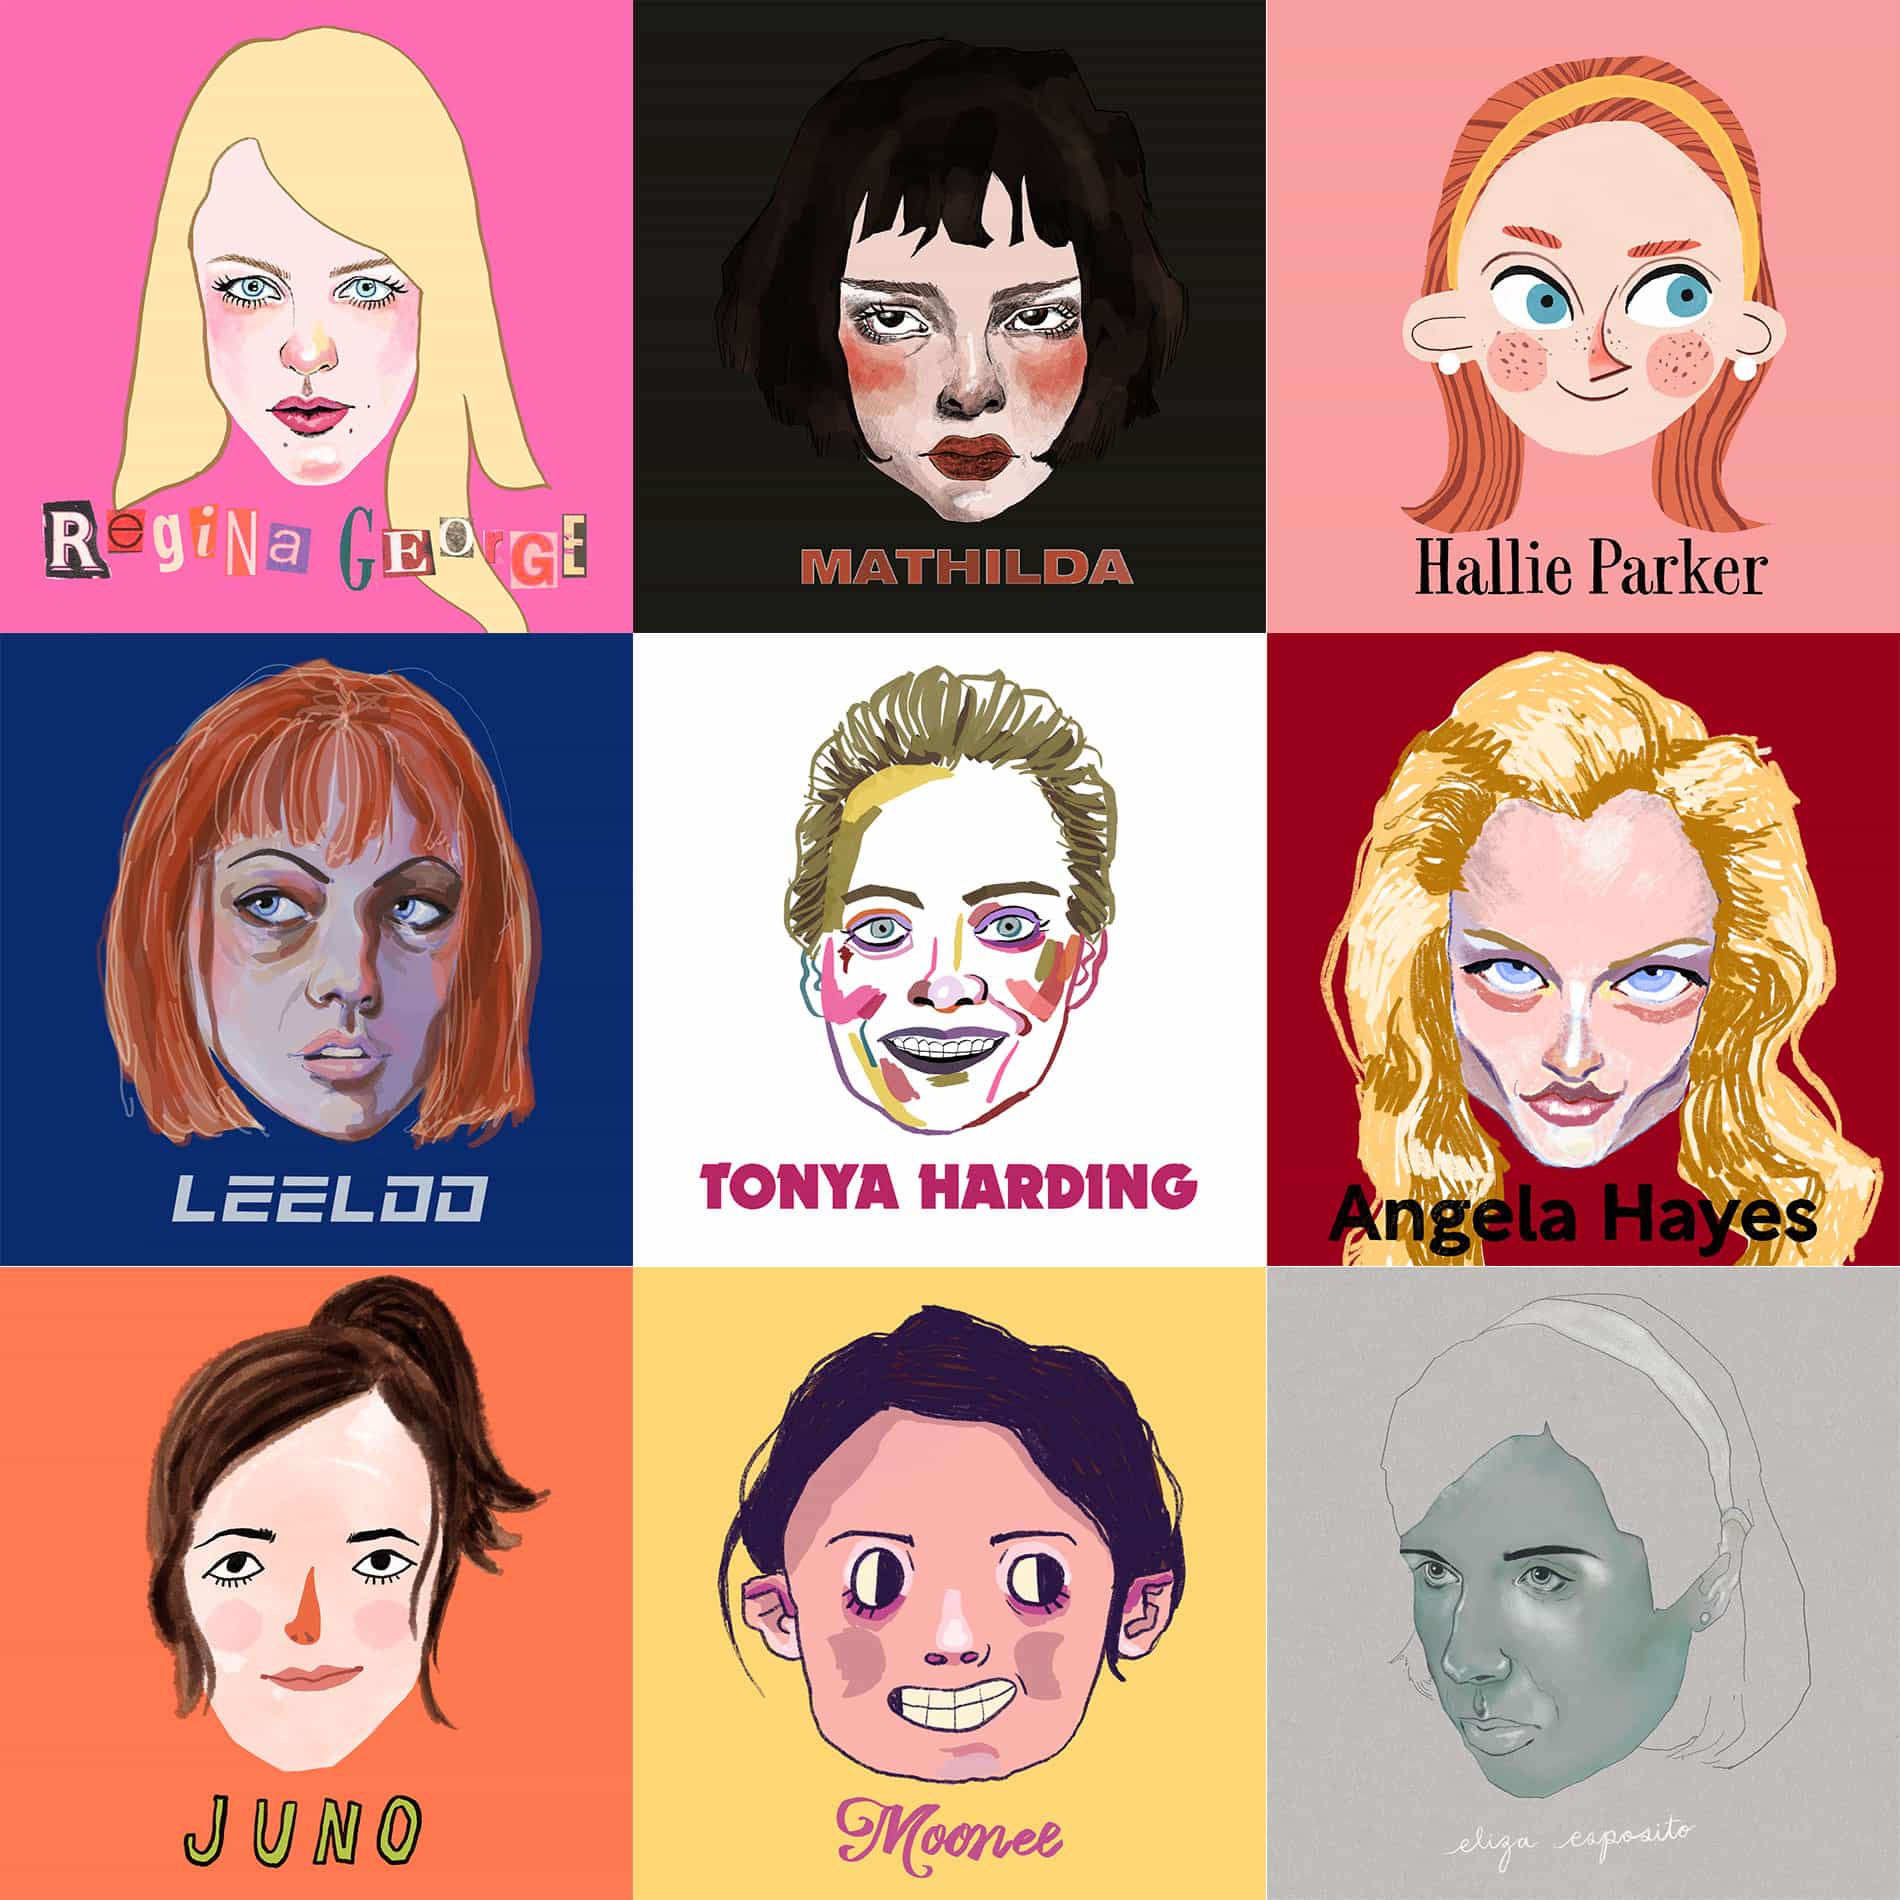 Digital portraits of women characters in film